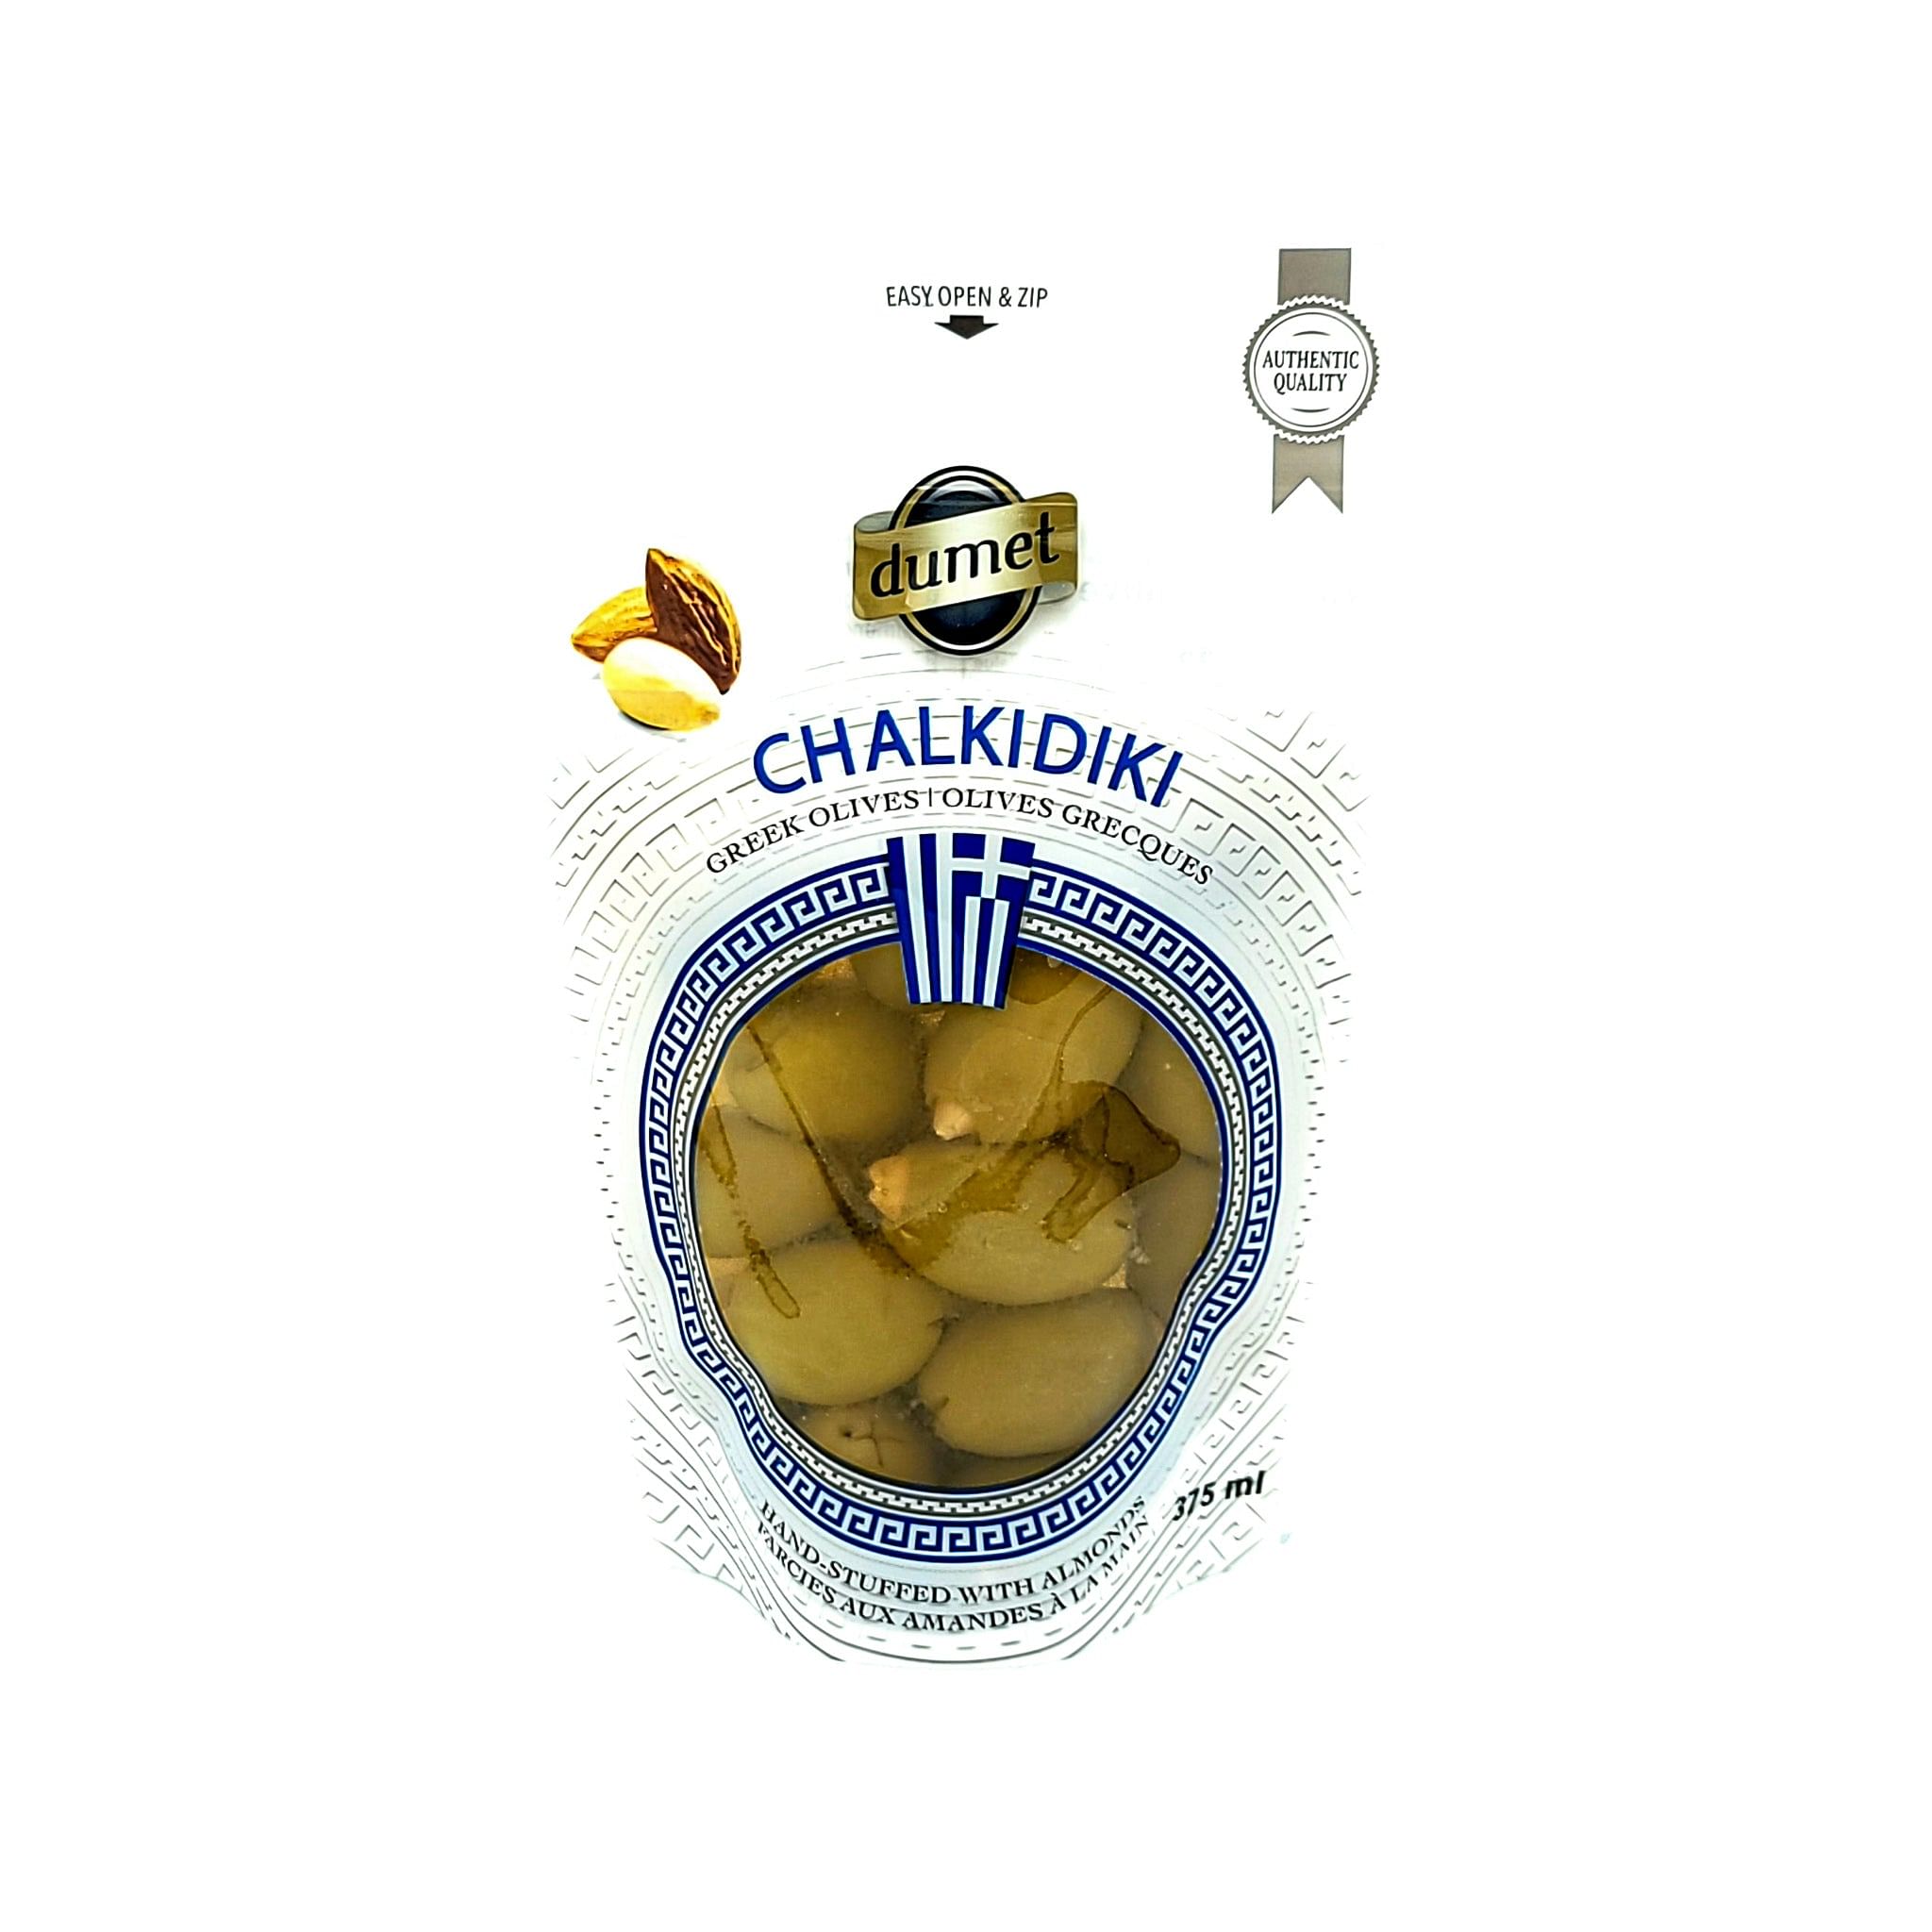 Dumet - Chalkidiki Almond Olives - 375ml